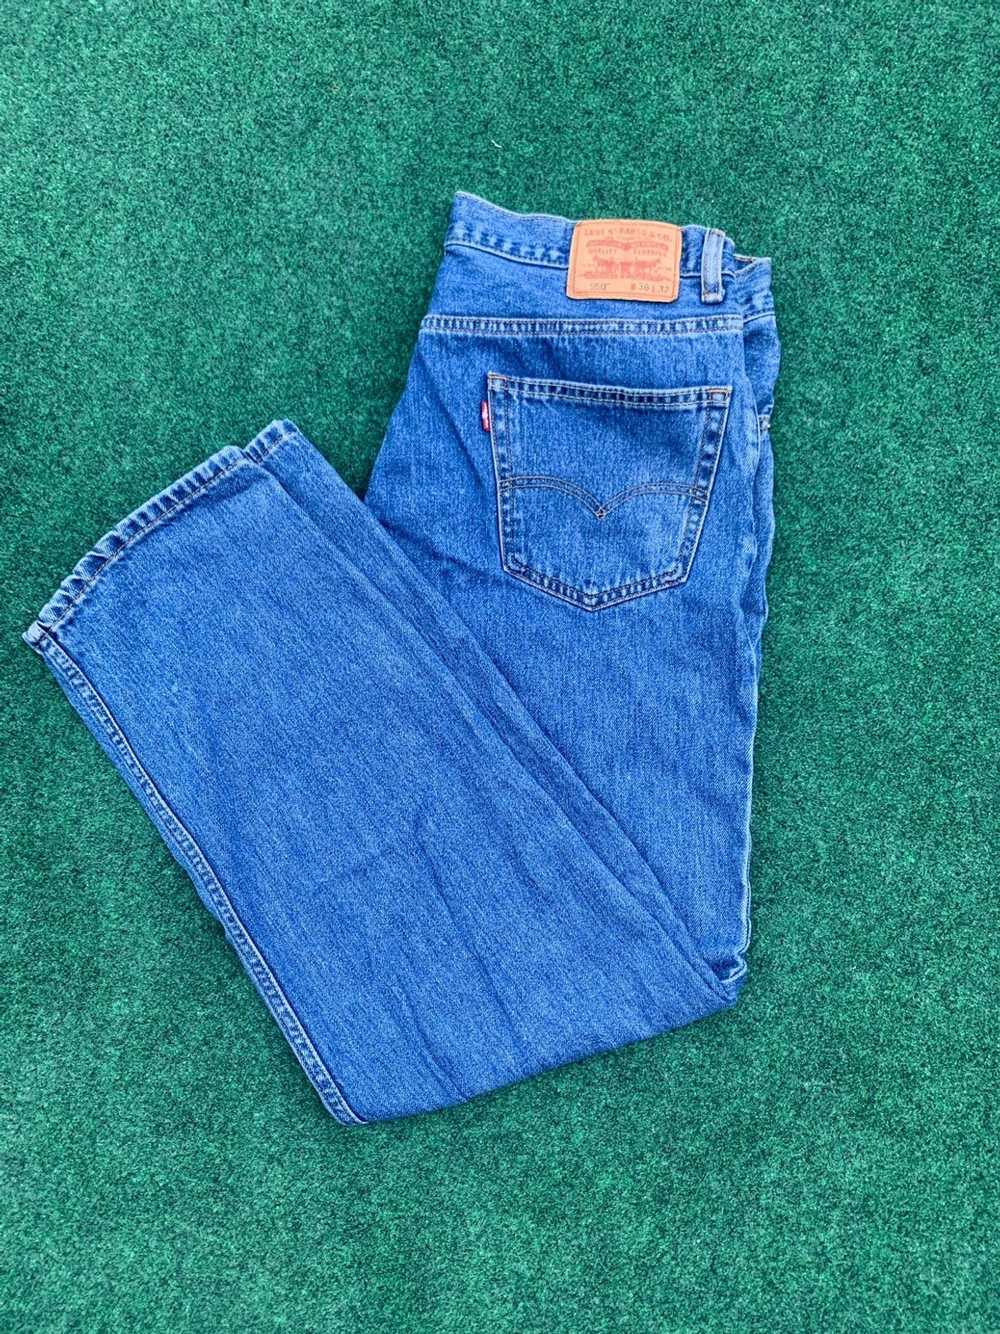 Levi's Vintage Levi’s 550 dark wash jeans - image 1